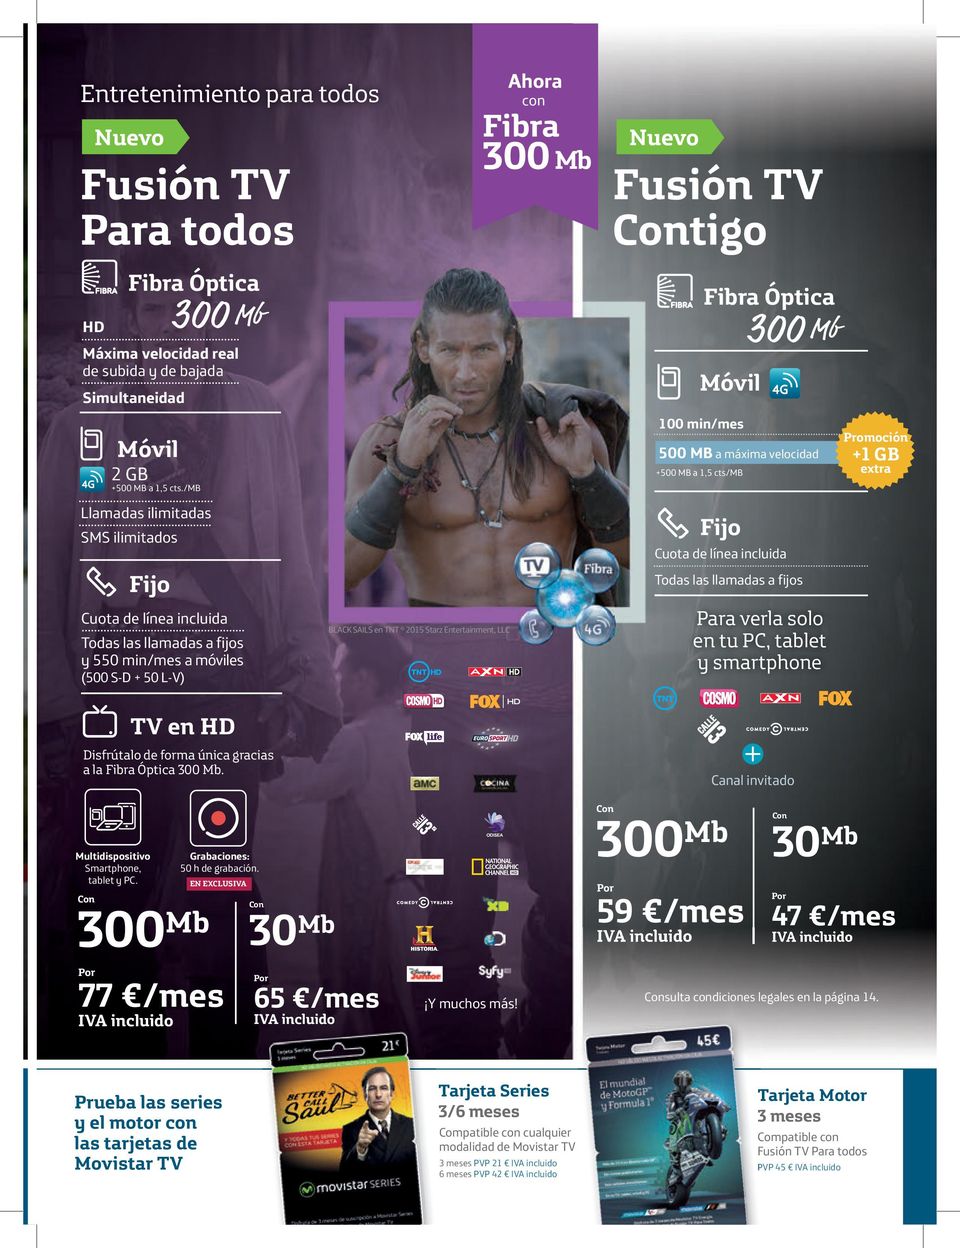 BLACK SAILS en TNT 2015 Starz Entertainment, LLC Ahora con Fibra Nuevo Fusión TV tigo Móvil 100 min/mes 500 MB a máxima velocidad +500 MB a 1,5 cts/mb Fibra Óptica Fijo Cuota de línea incluida Todas